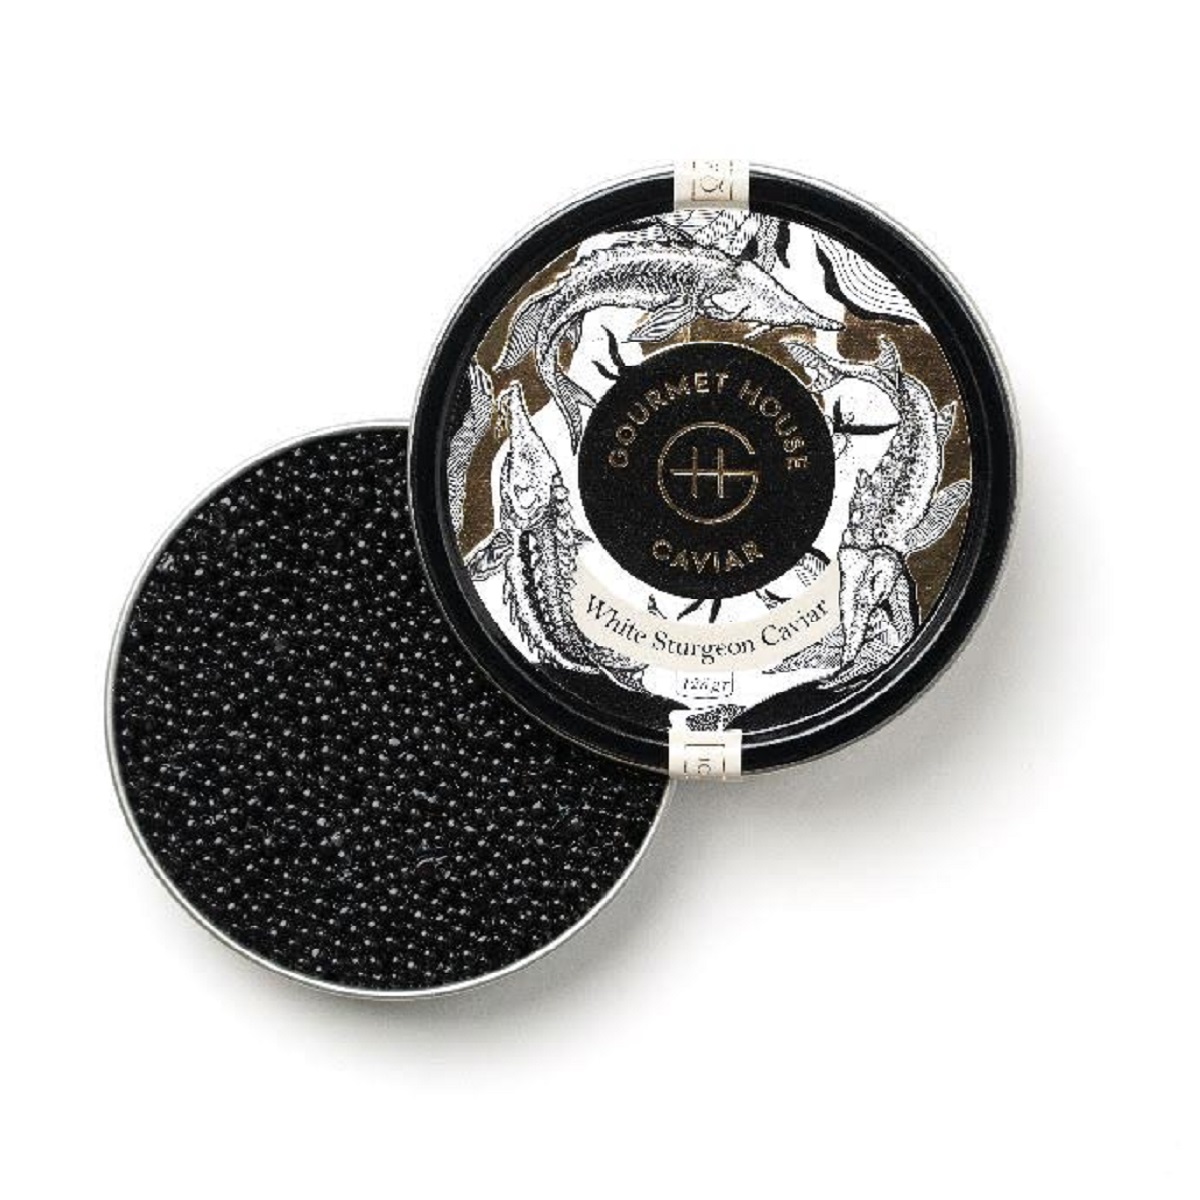 Italian White Sturgeon Caviar - Gourmet house 100g